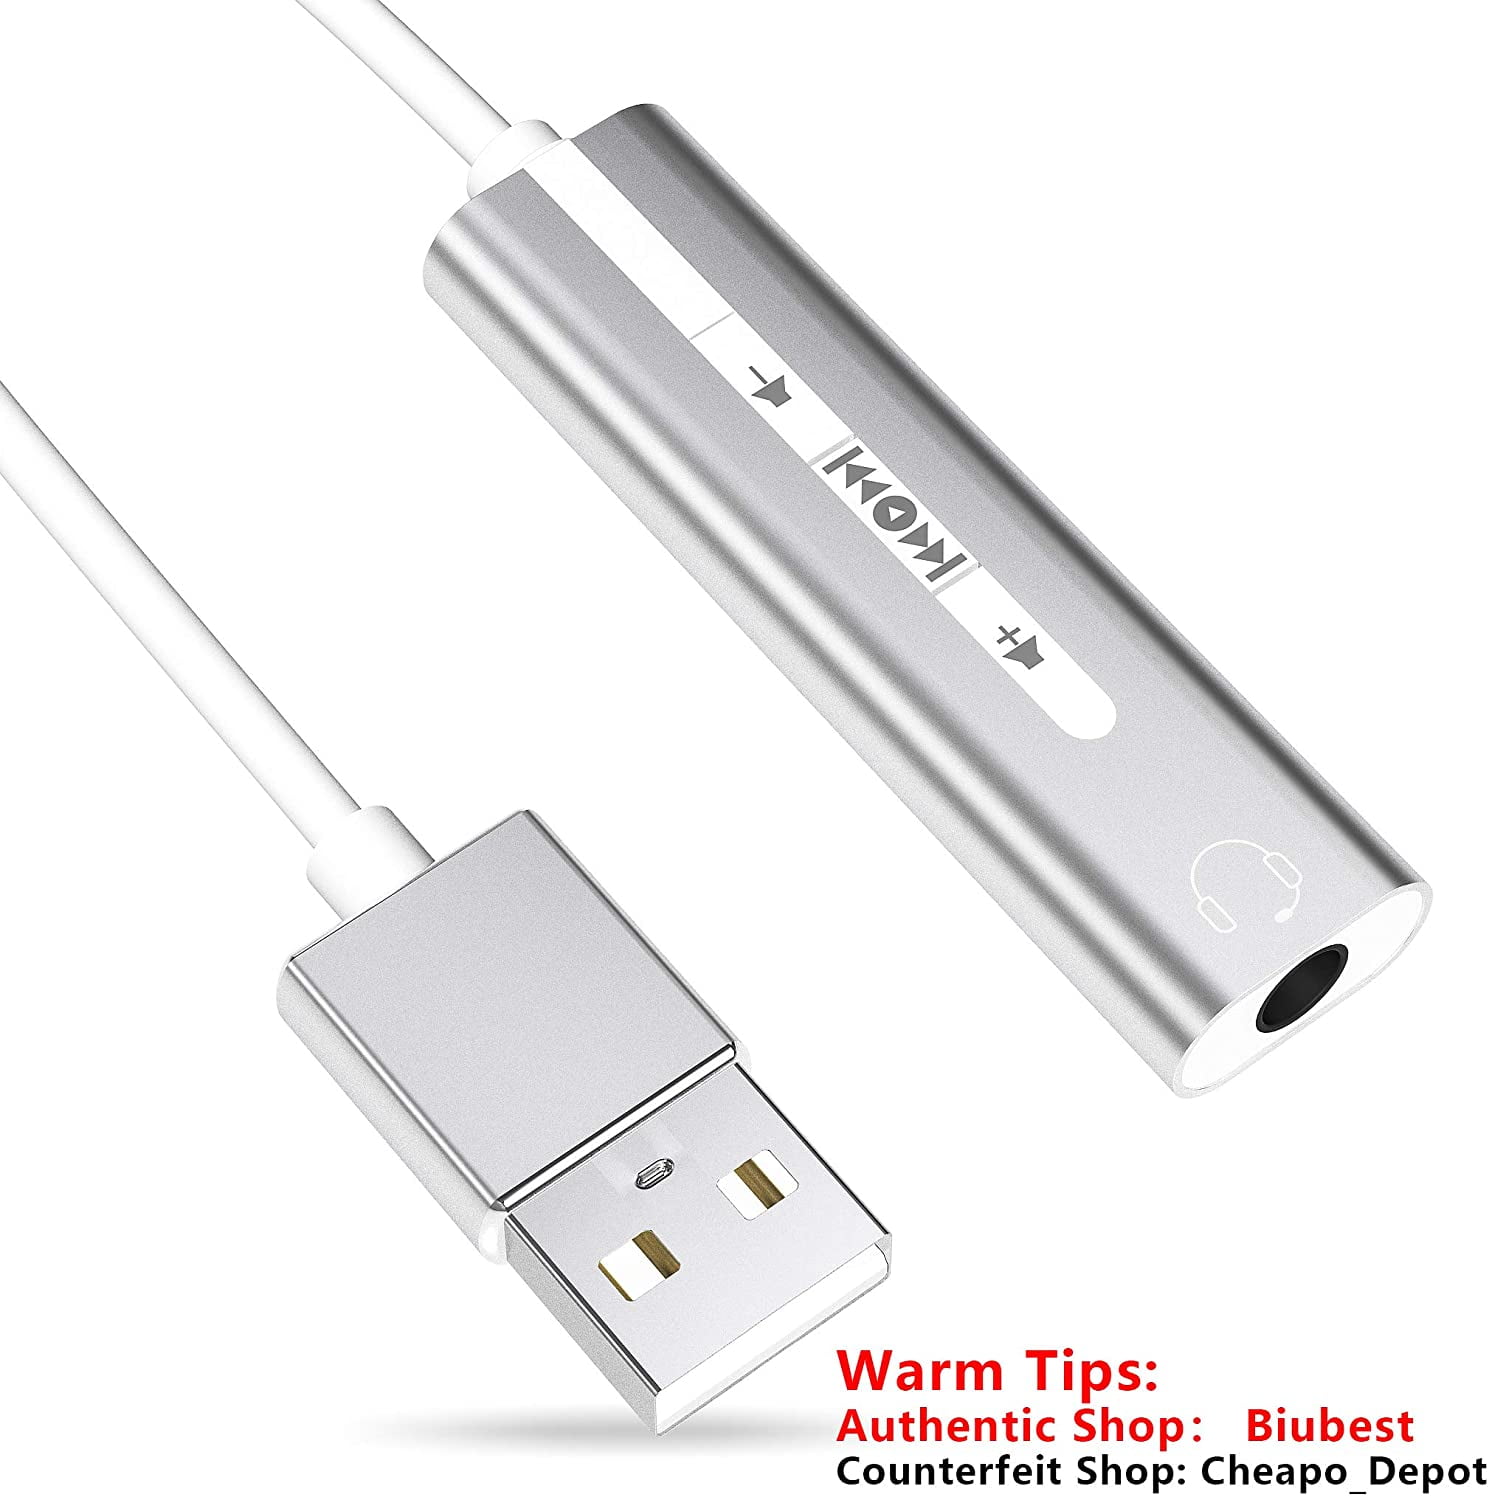 USB Sound Card External Converter USB Audio Adapter with 3.5mm Aux for Headset, PC, Laptops, Desktops, PS4, Windows, Mac, and HiFi Magic Voice Silver - Walmart.com